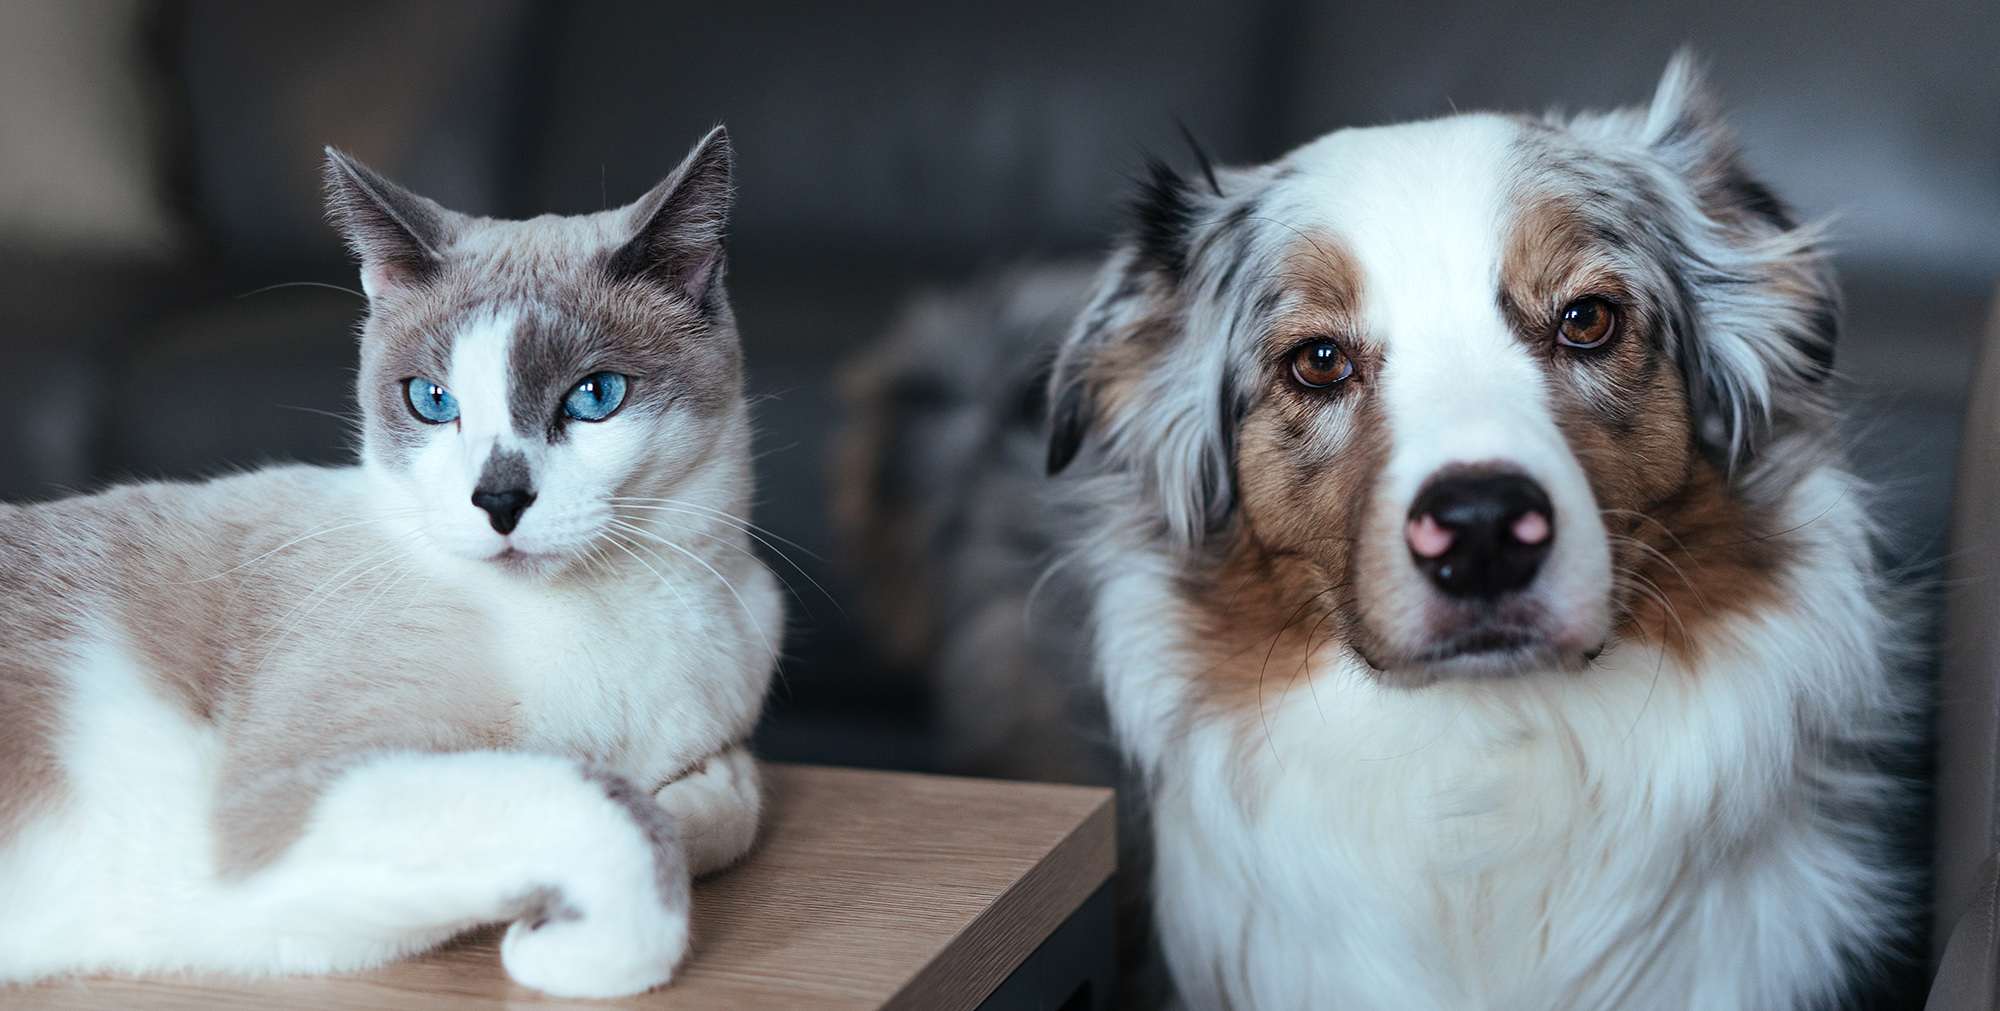 clinique veterinaire fabella ophtalmologie chat chien